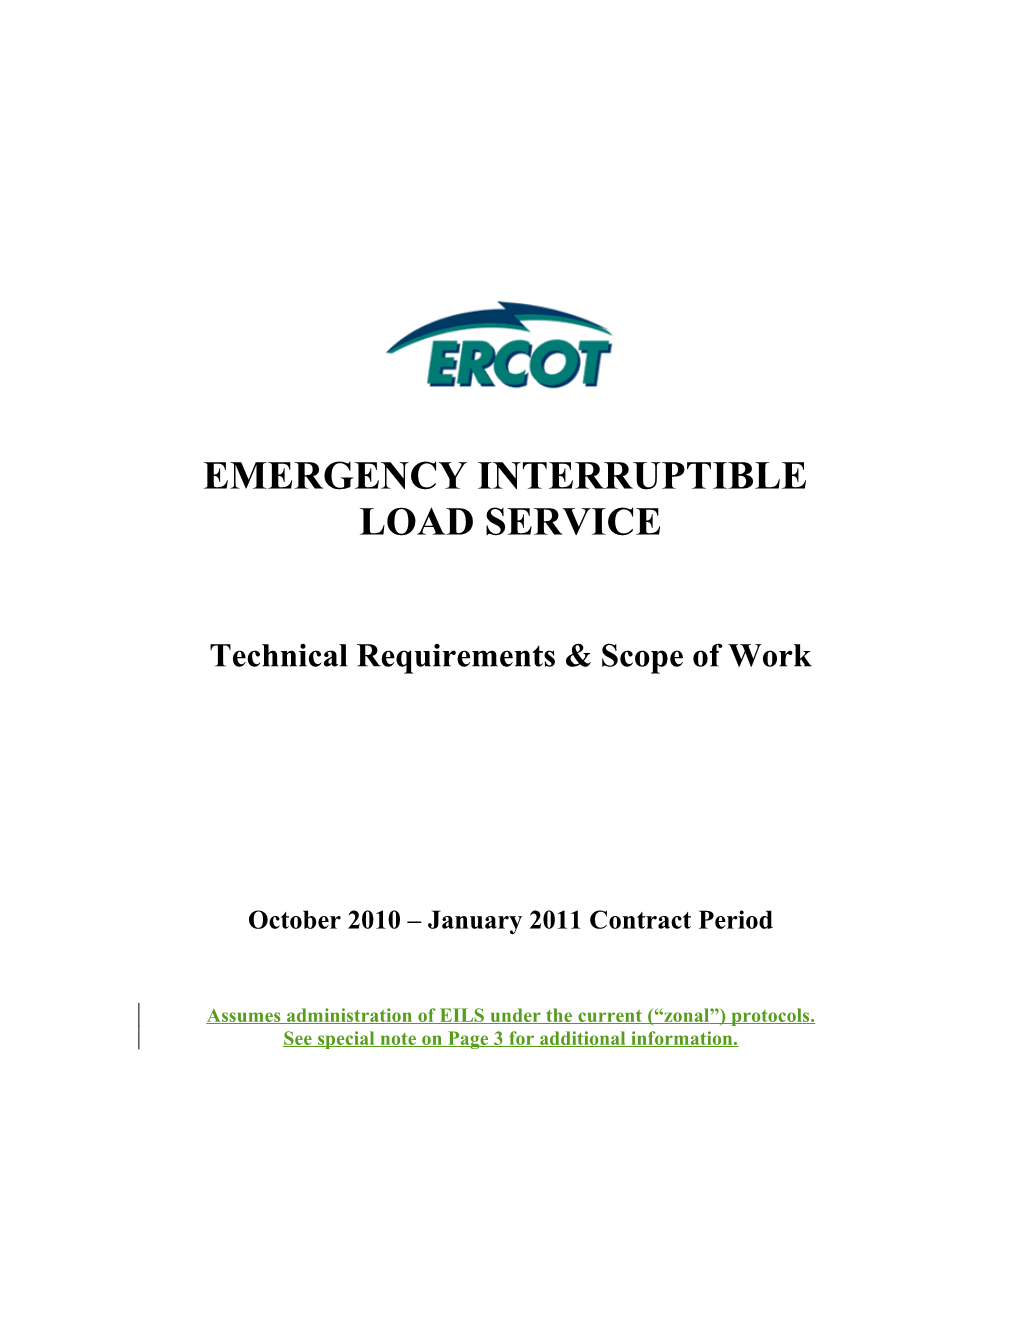 ERCOT Emergency Interruptible Load Service